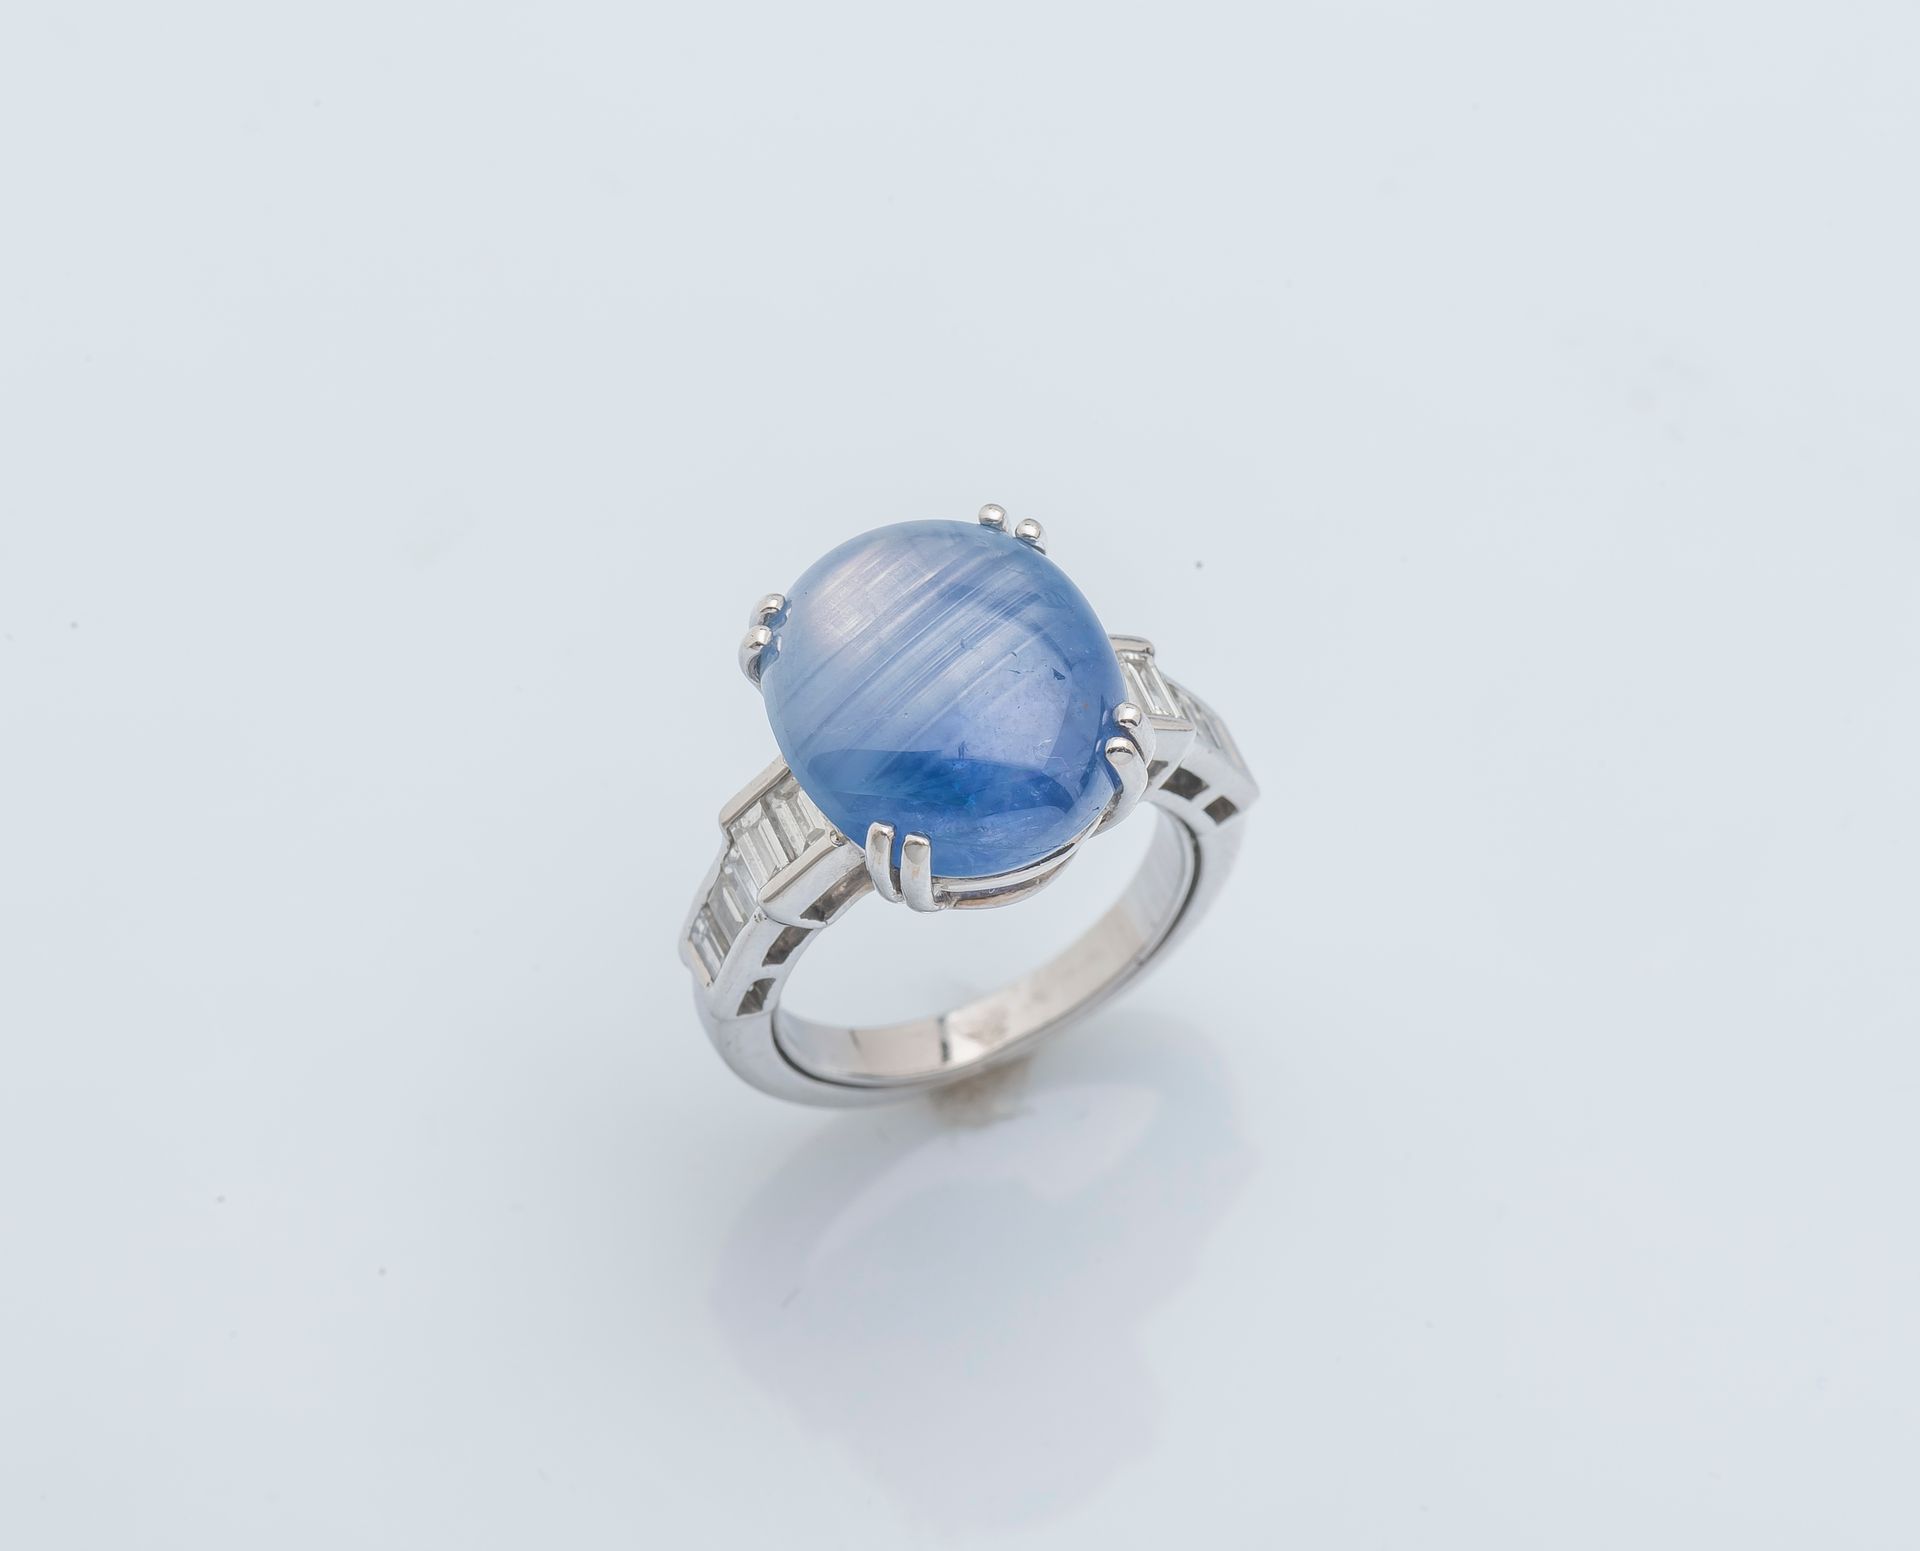 Null 一枚18K（750‰）白金戒指，镶嵌着一颗凸圆形的星形蓝宝石，重约9.7克拉，戒指的肩部镶嵌着层层叠叠的祖母绿切割钻石。法国的工作。

手指大小：47&hellip;